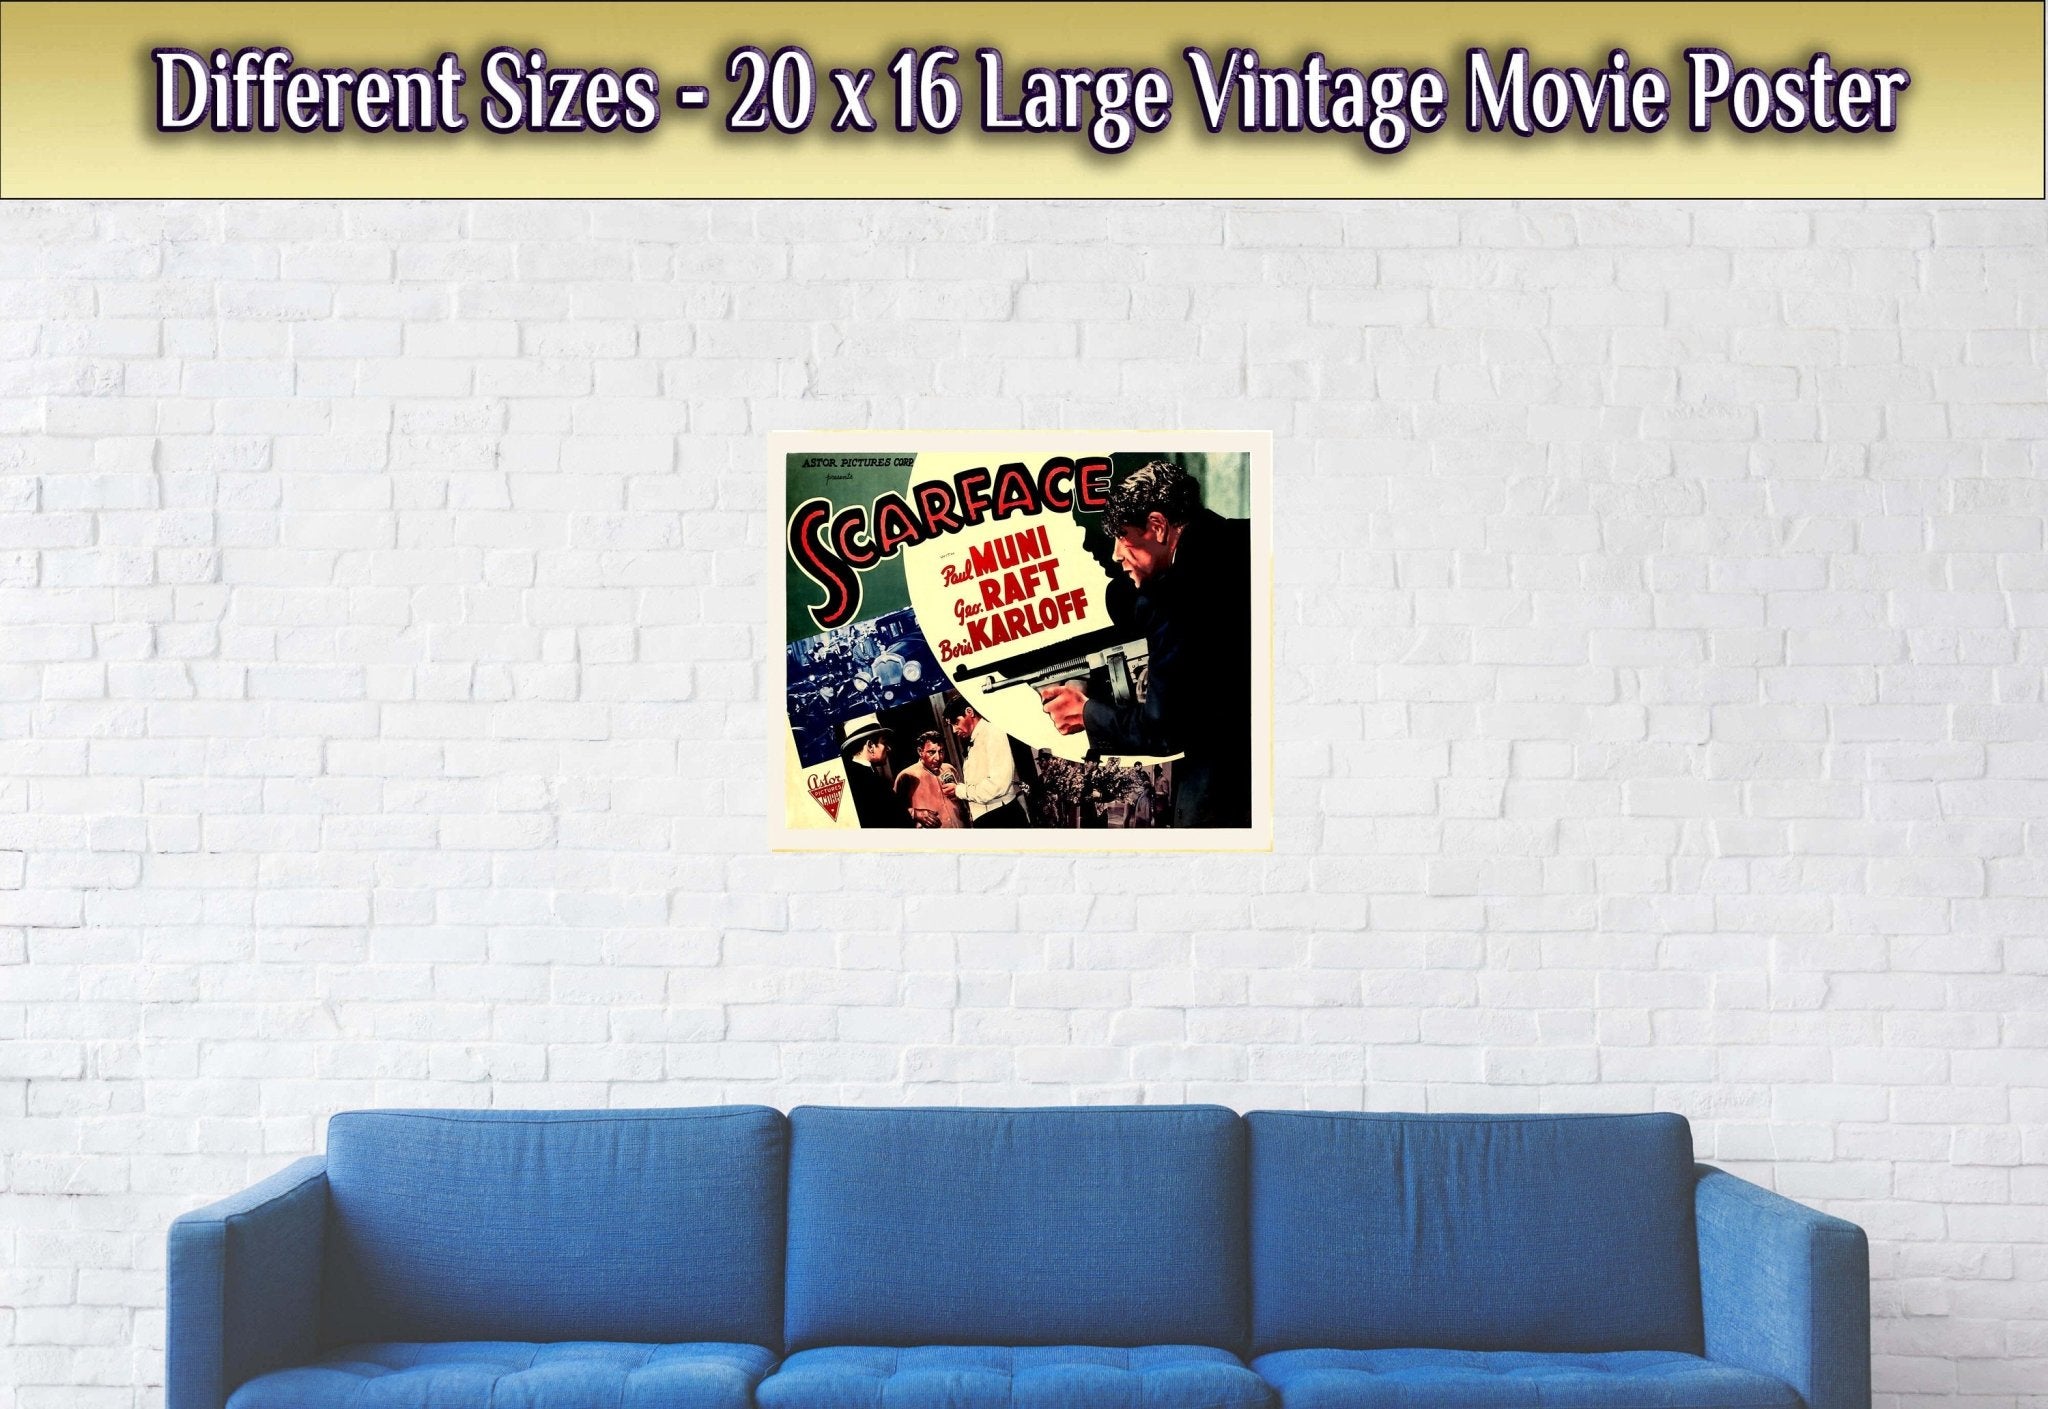 Scarface Movie Poster, Original Vintage Movie Poster 1932 Movie Art - Paul Muni, George Raft, Boris Karloff, Ann Dvorak - WallArtPrints4U